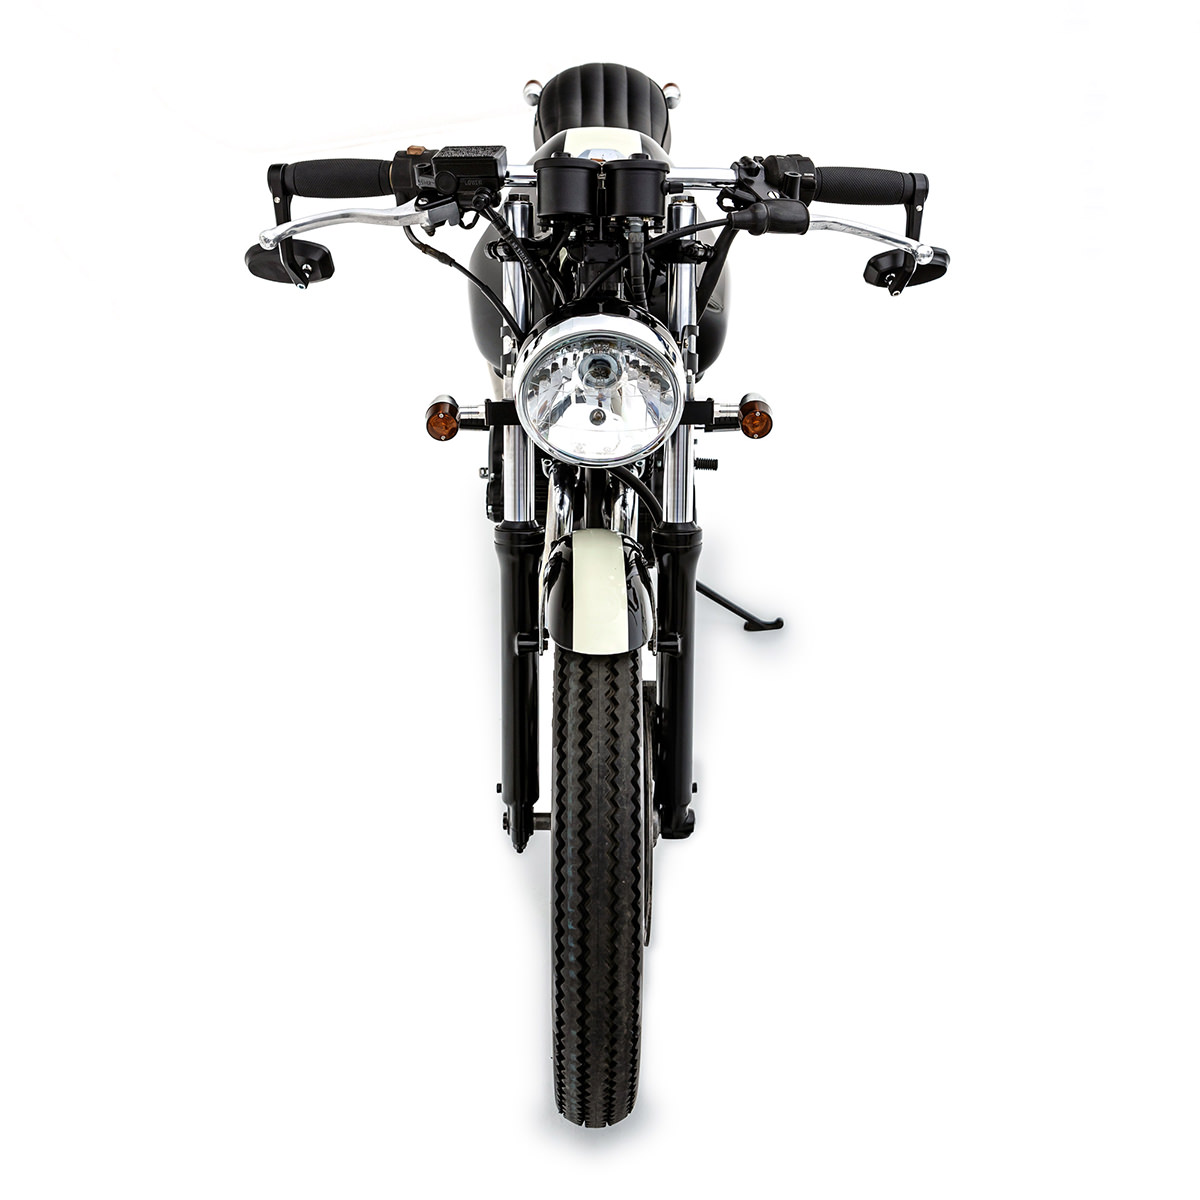 Honda GB250 by Ellaspede | Bike EXIF